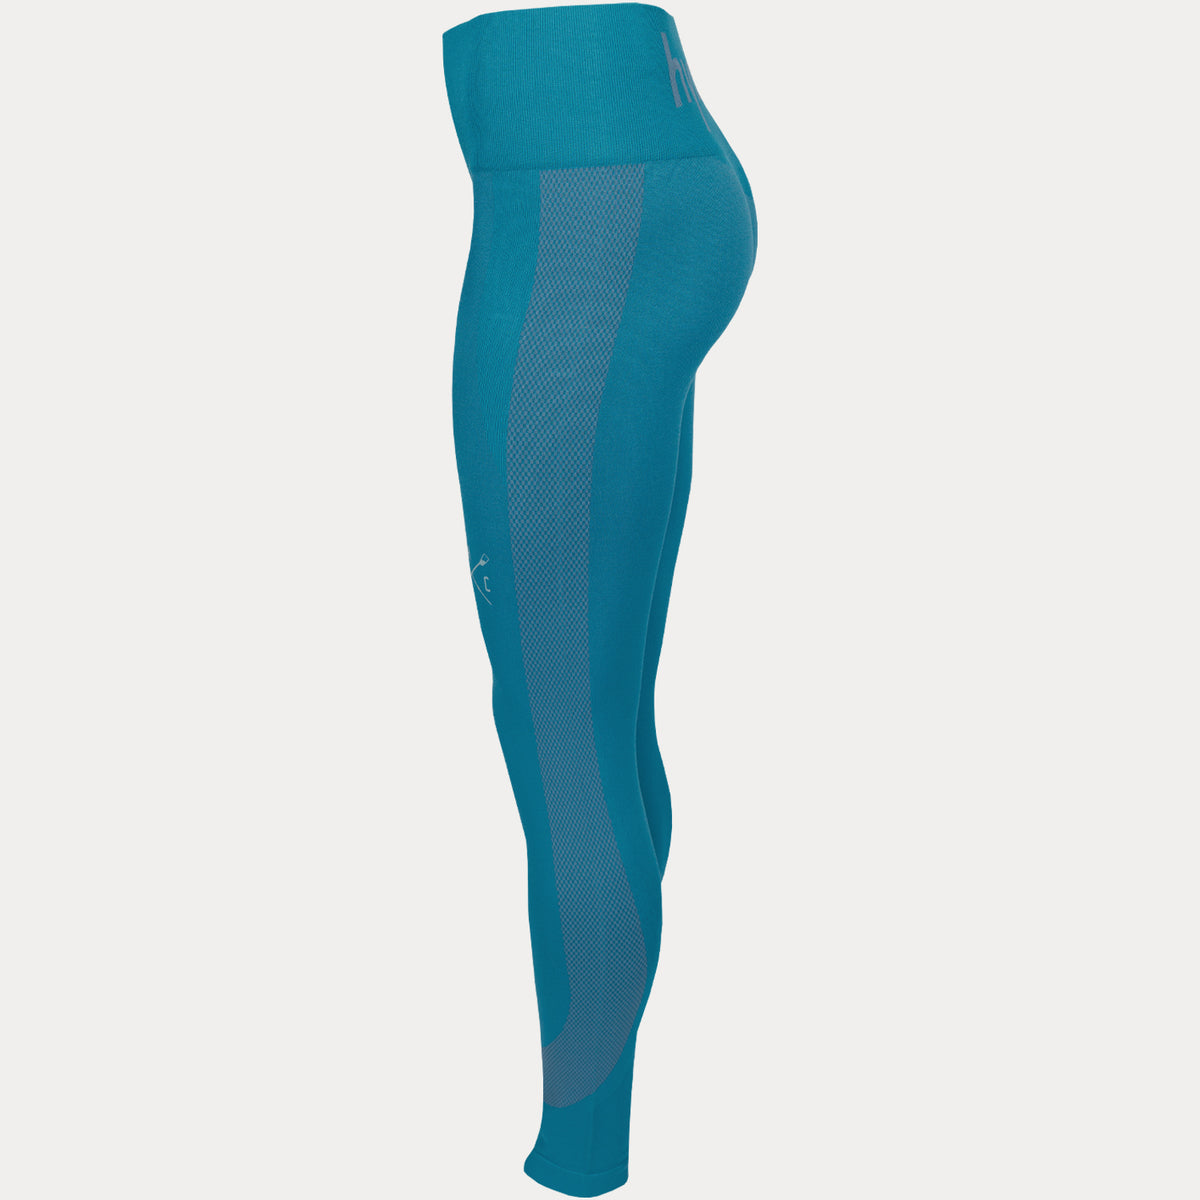 size view of dark blue flex seamless leggings